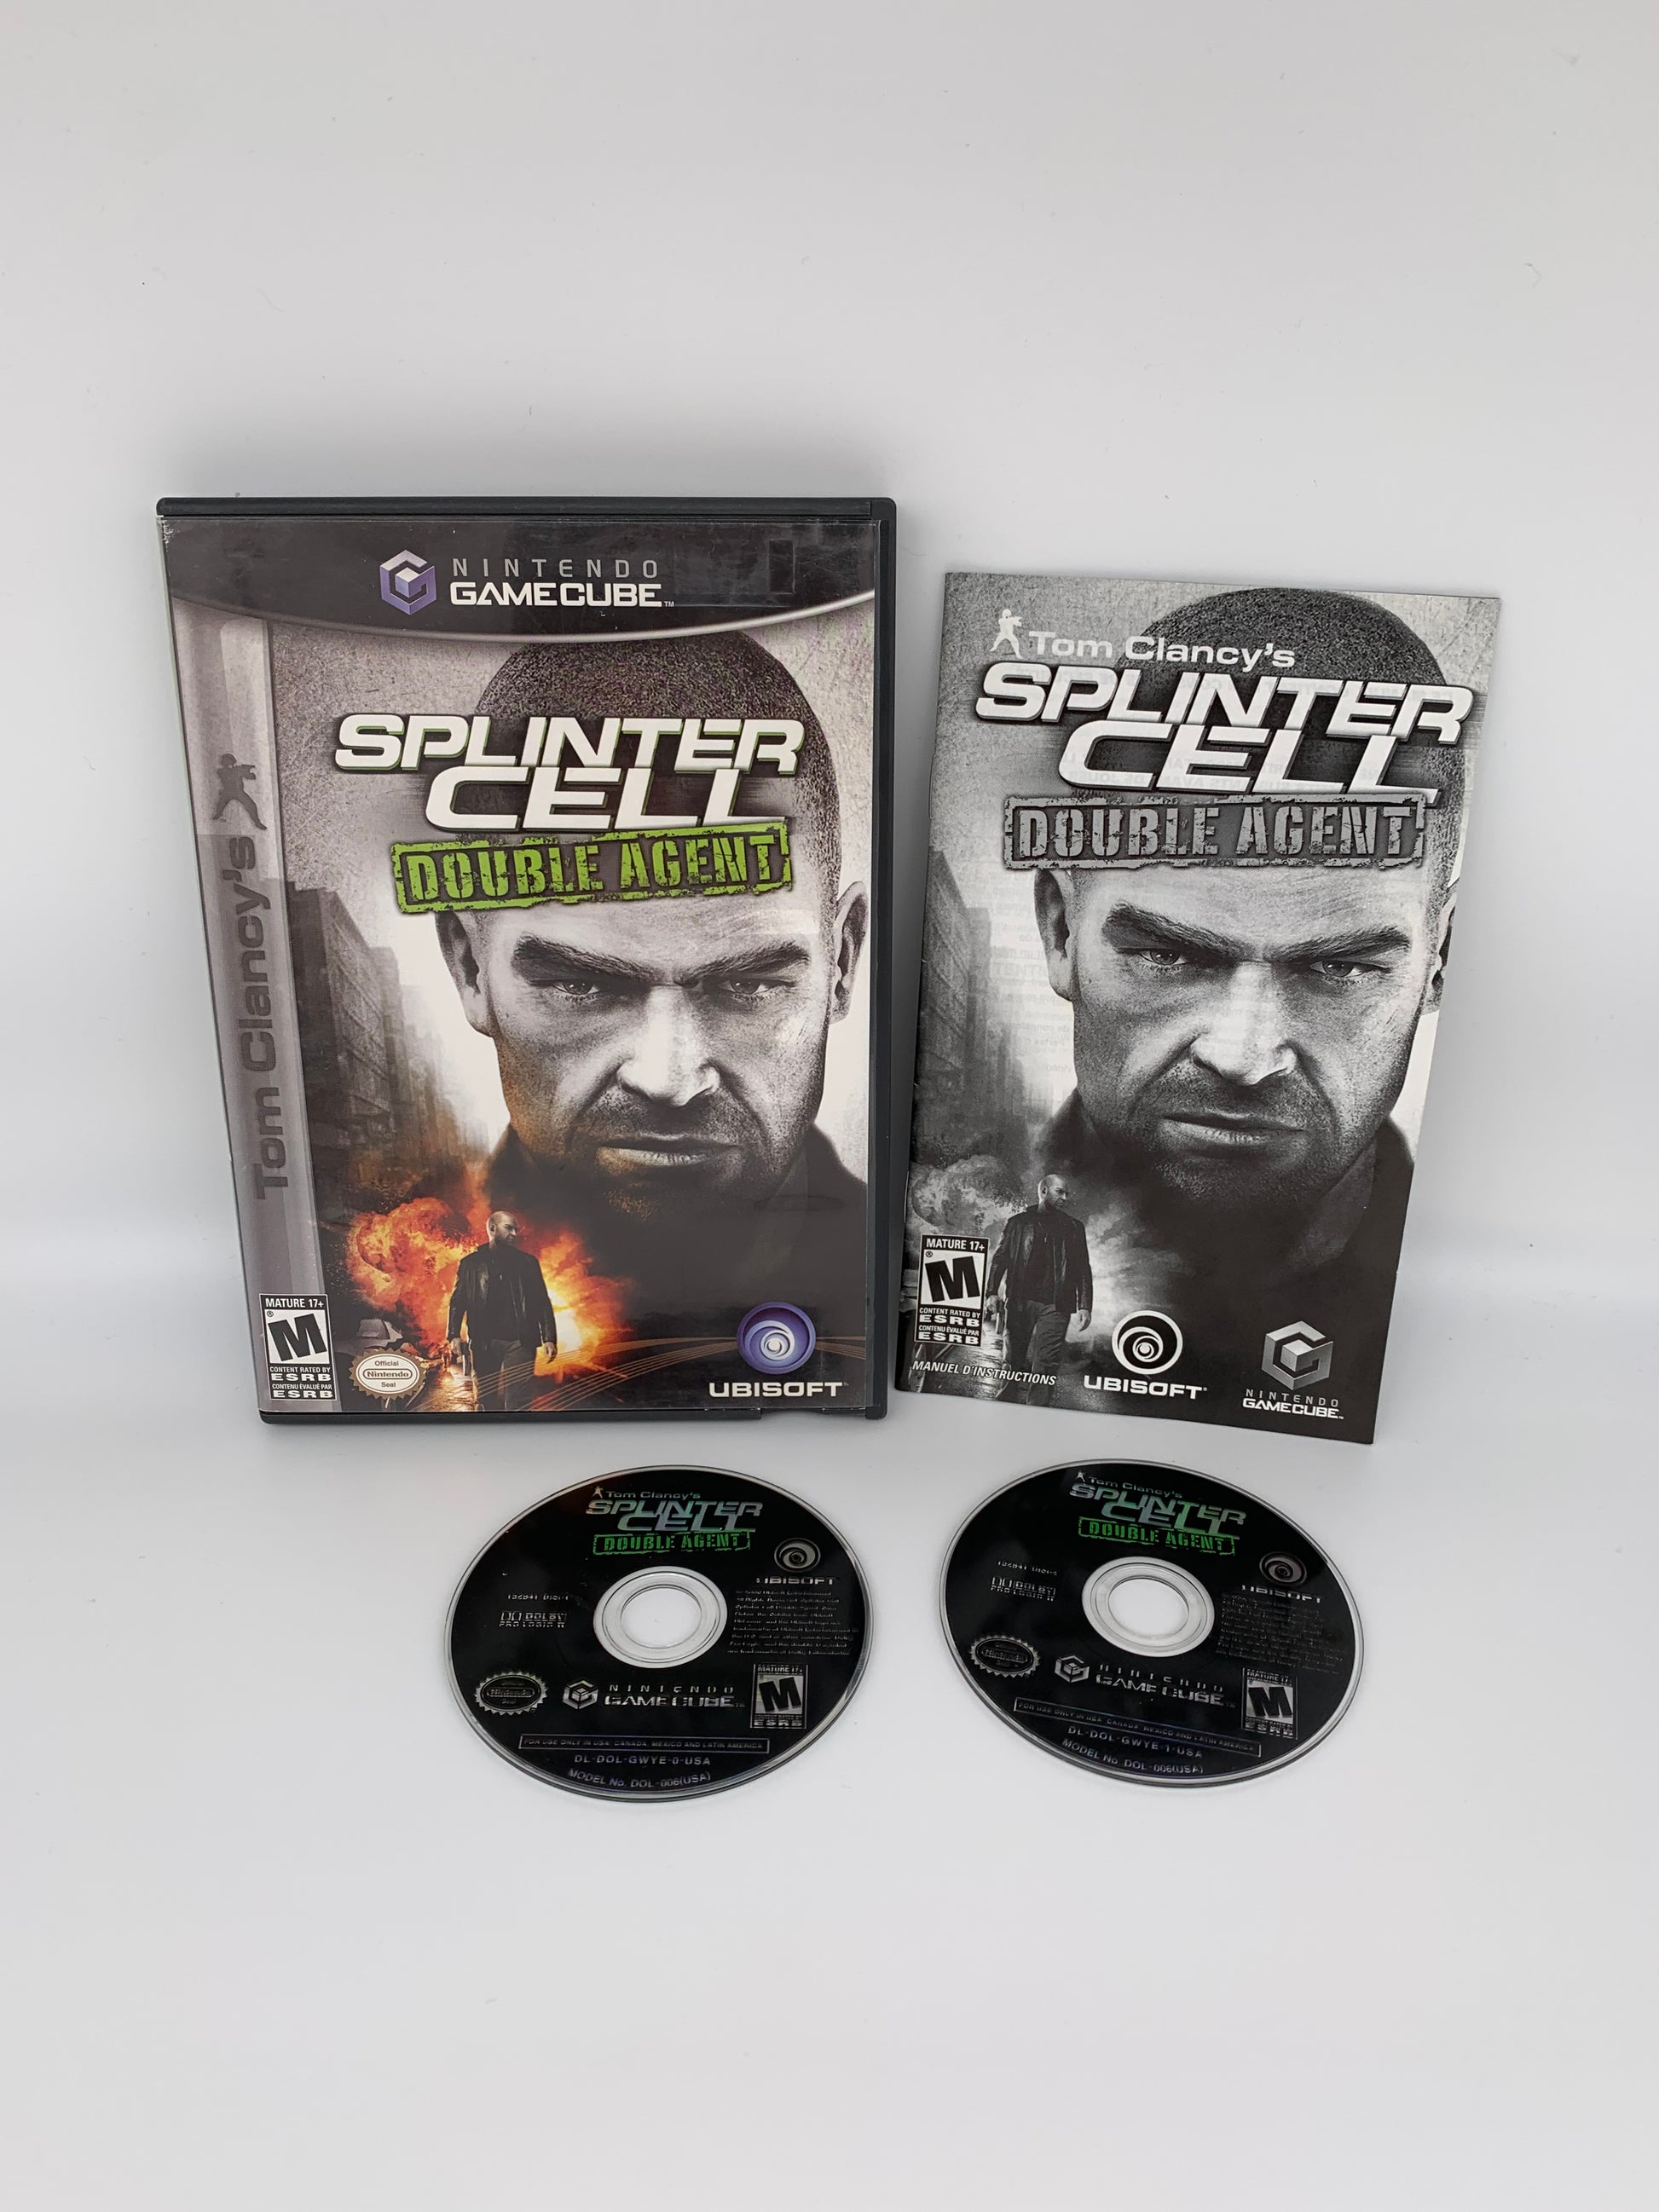 PiXEL-RETRO.COM : NINTENDO GAMECUBE COMPLETE CIB BOX MANUAL GAME NTSC TOM CLANCEY'S SPLINTER CELL DOUBLE AGENT